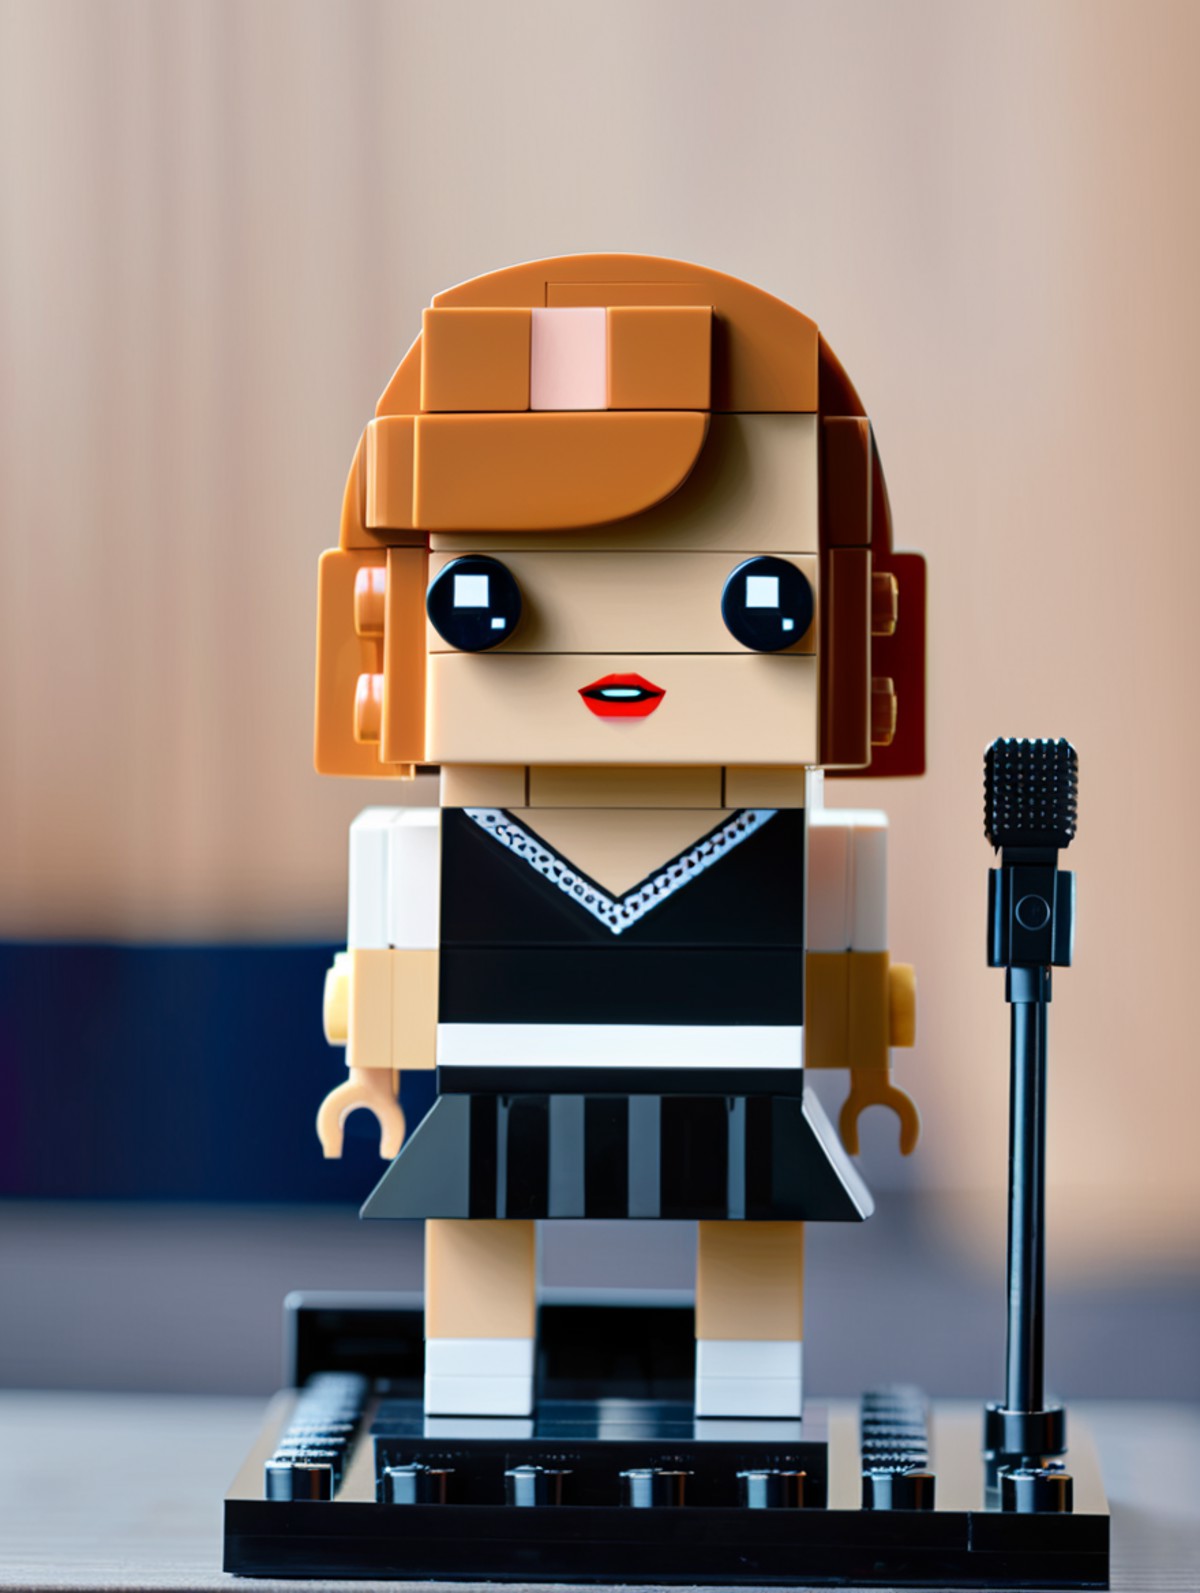 <lora:Lego_XL_v2.1:0.8>
LEGO BrickHeadz, Taylor Swift singing on stage in spotlight